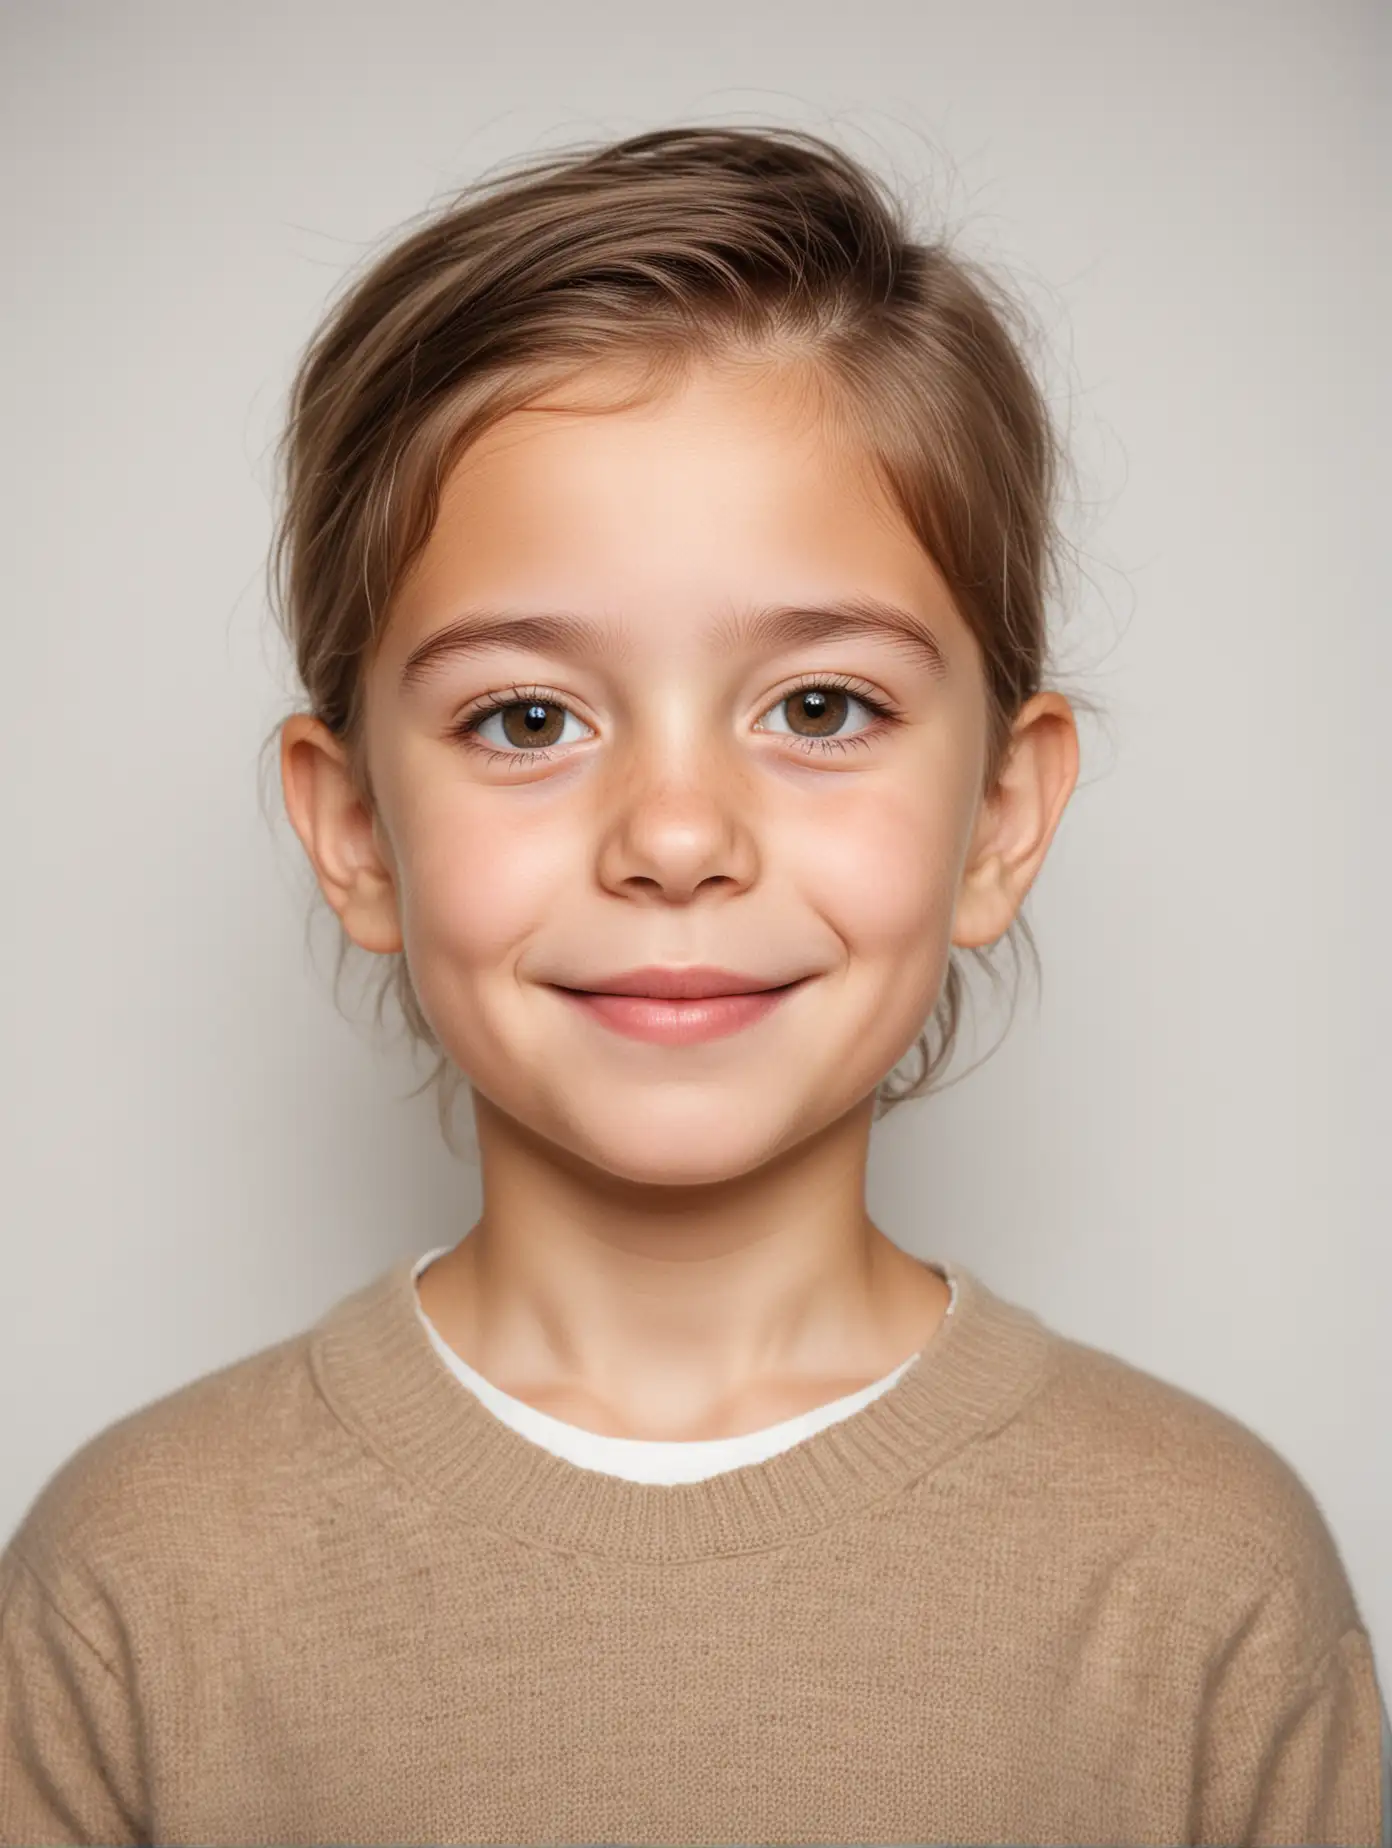 Passport Photo for Child Under 10 on Plain White Background